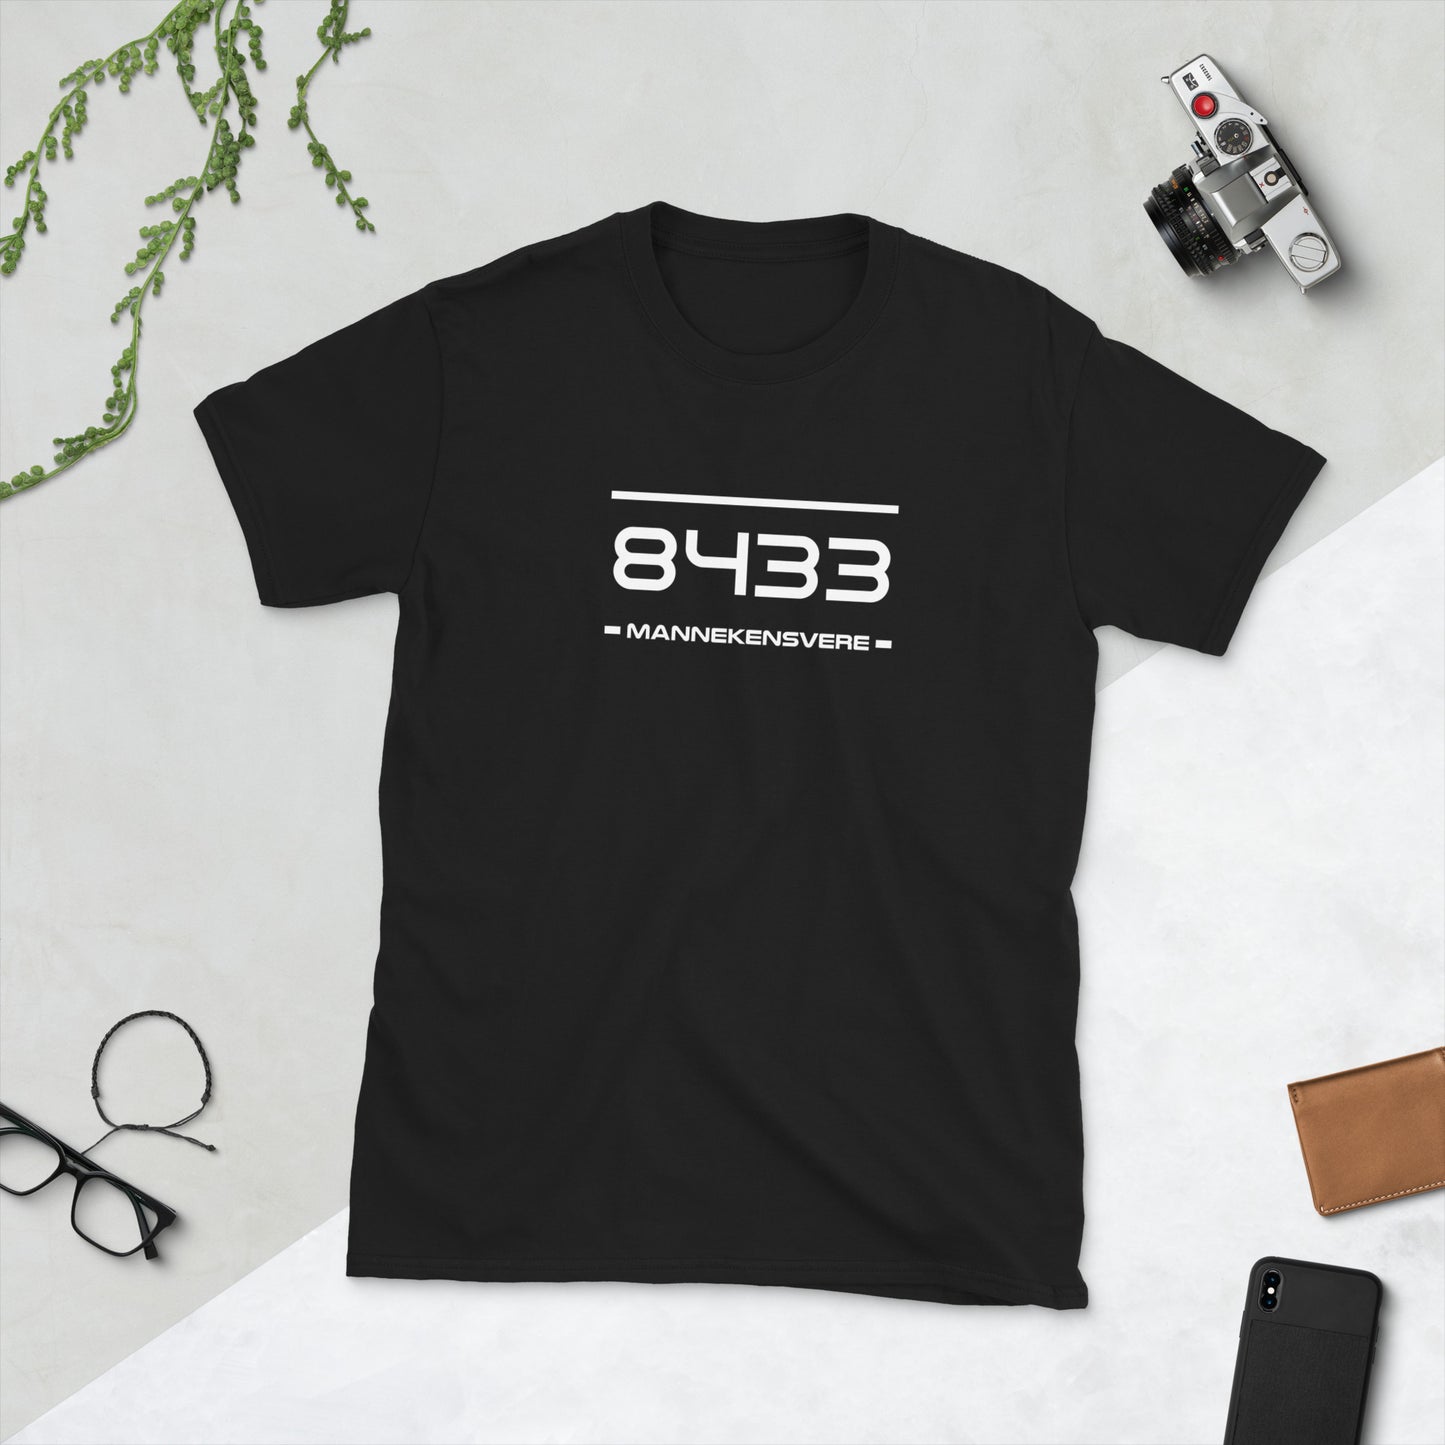 Tshirt - 8433 - Mannekensvere